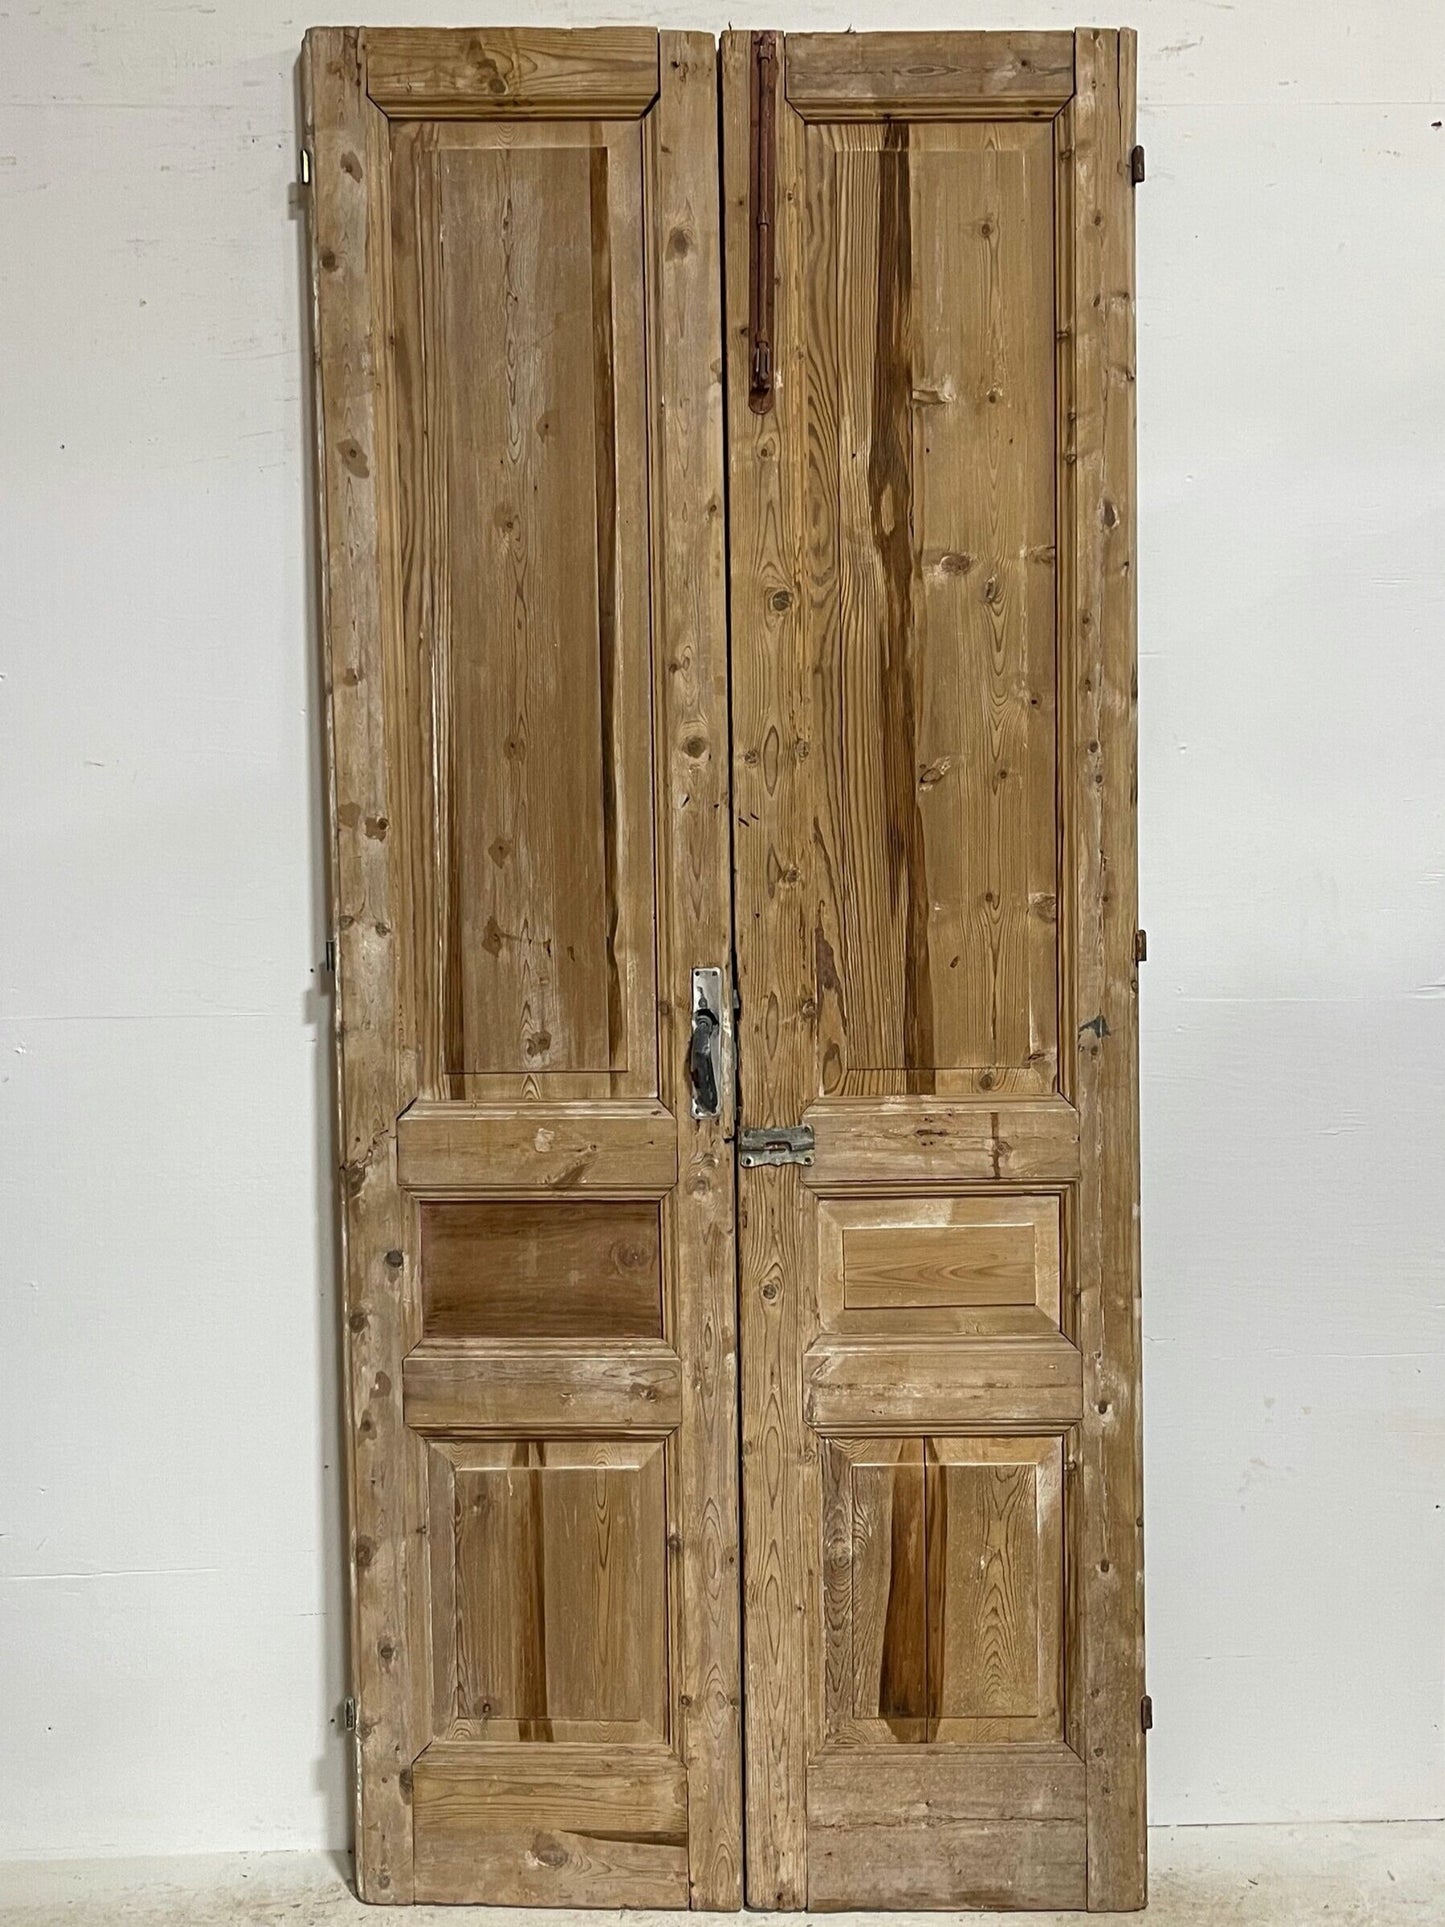 Antique French doors (99.25x43) H0117s